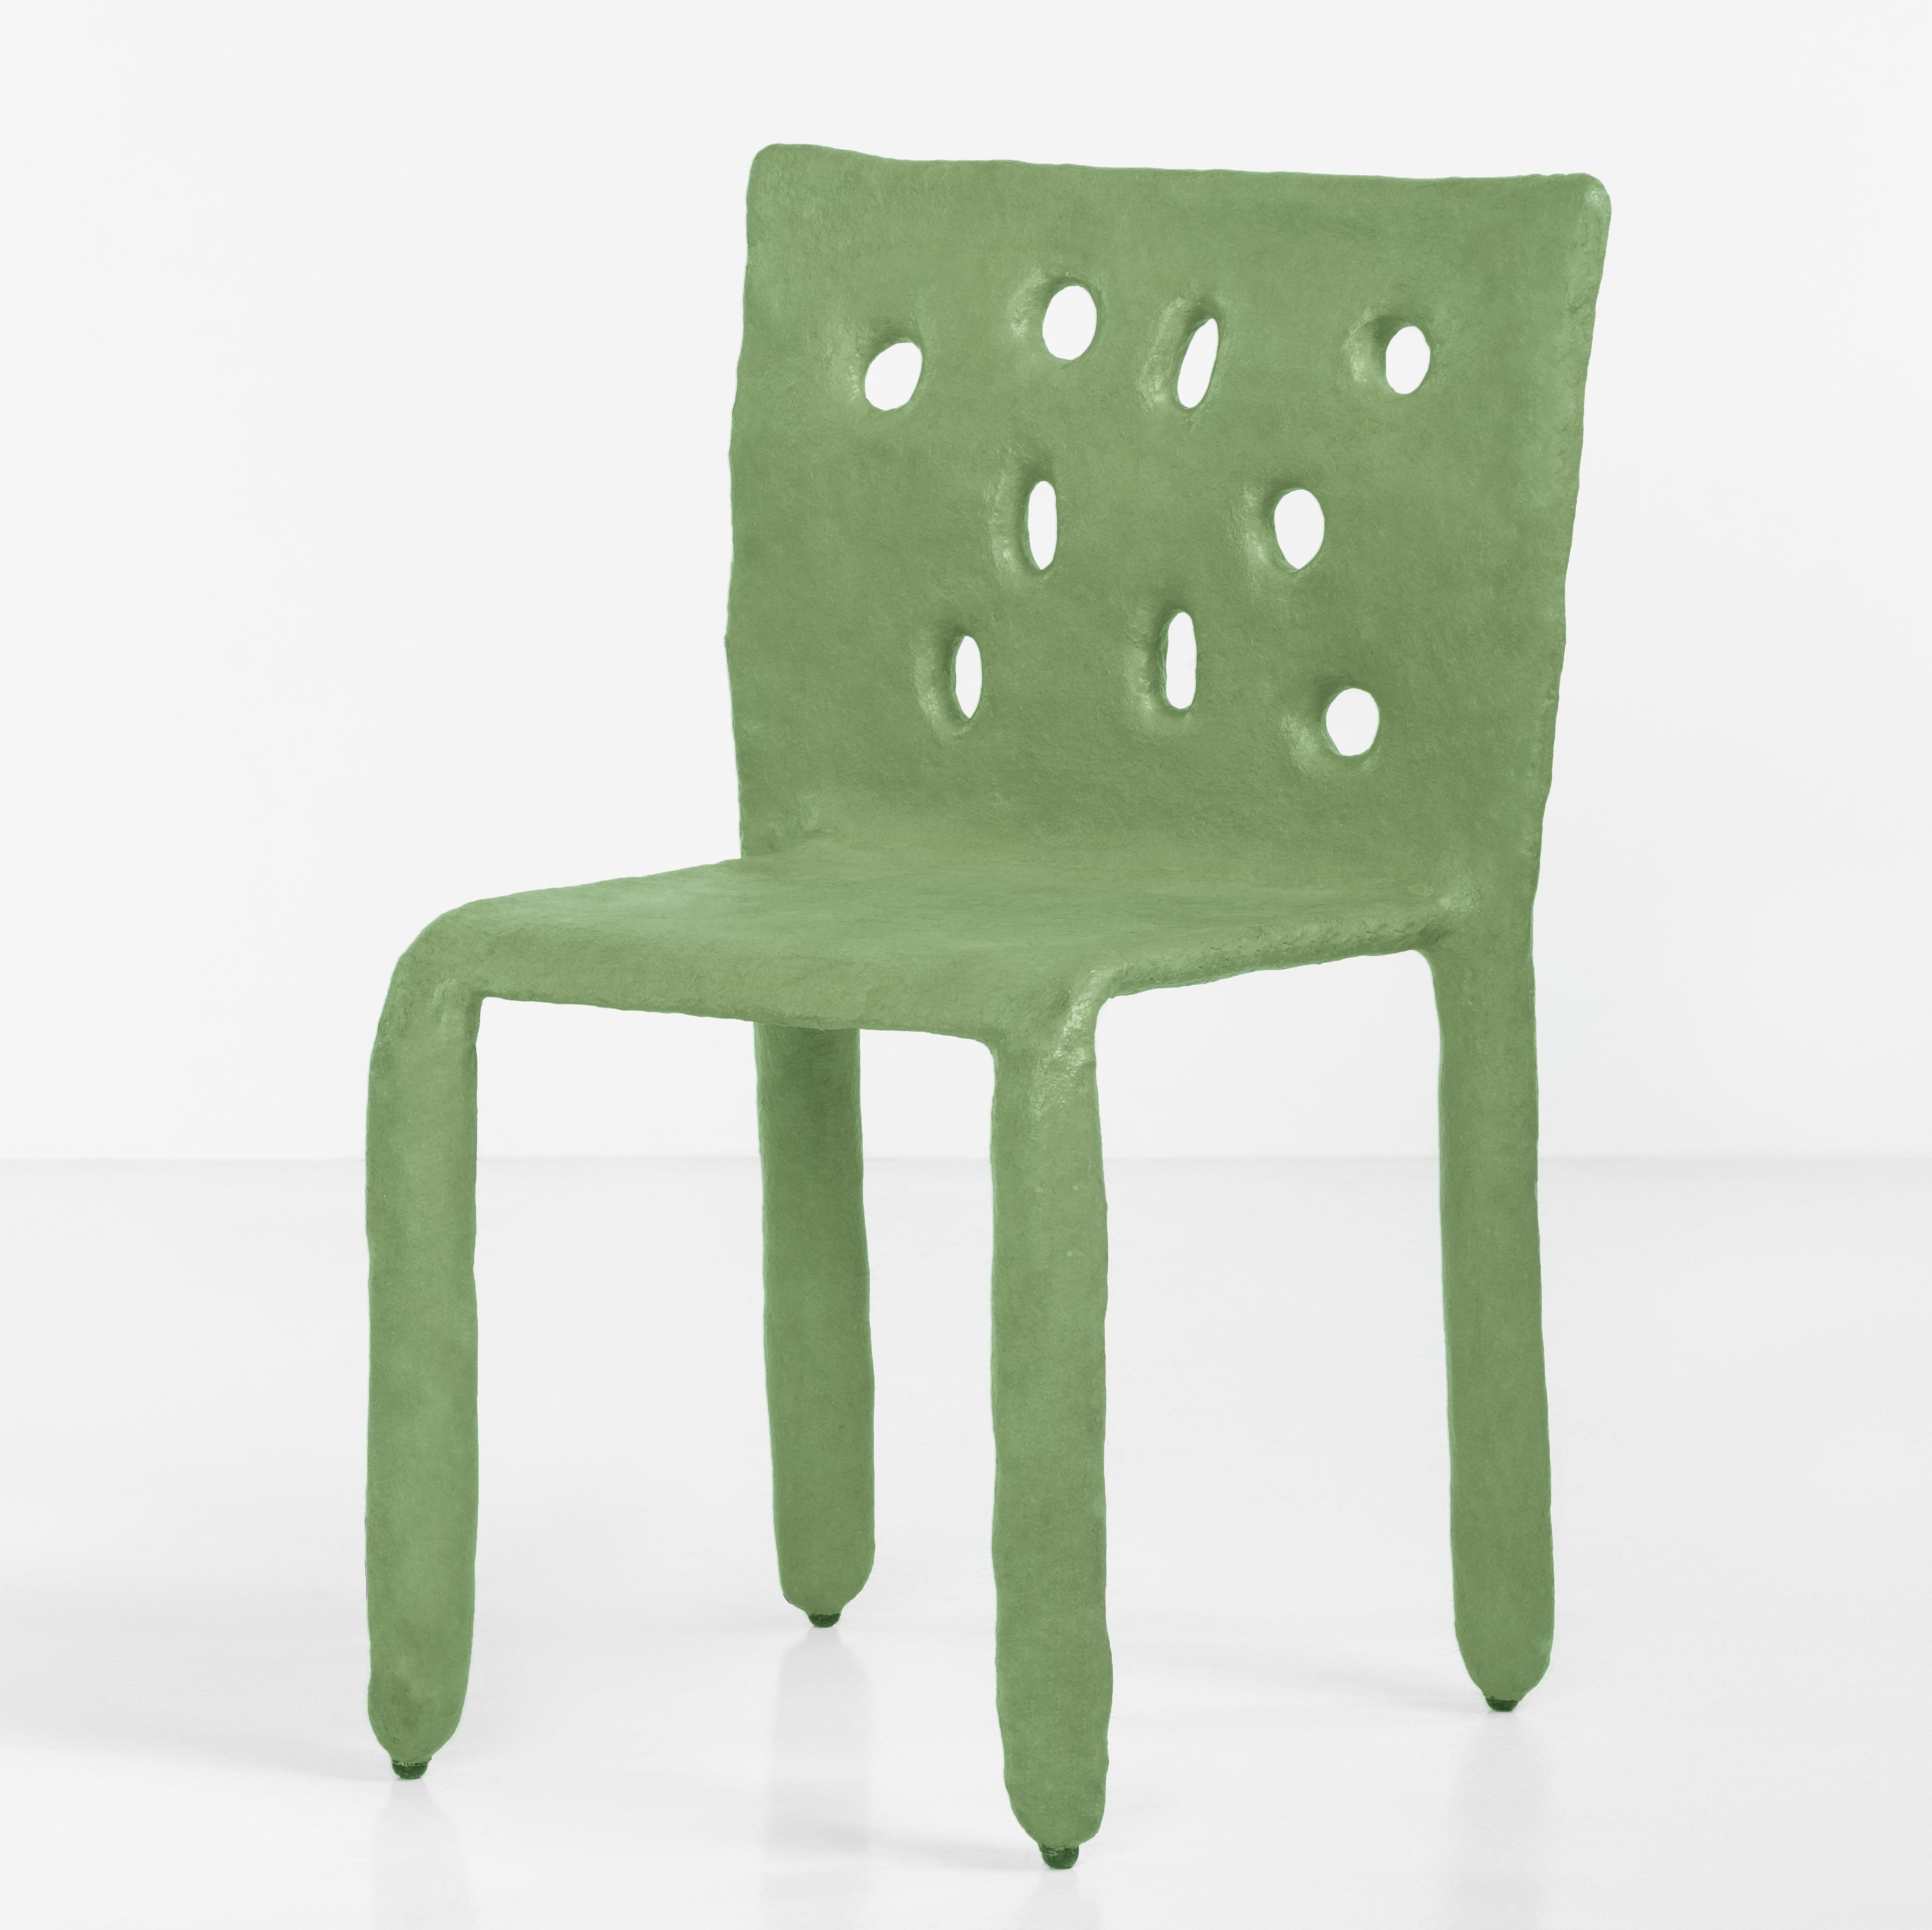 Blue Sculpted Contemporary Chair by FAINA 8